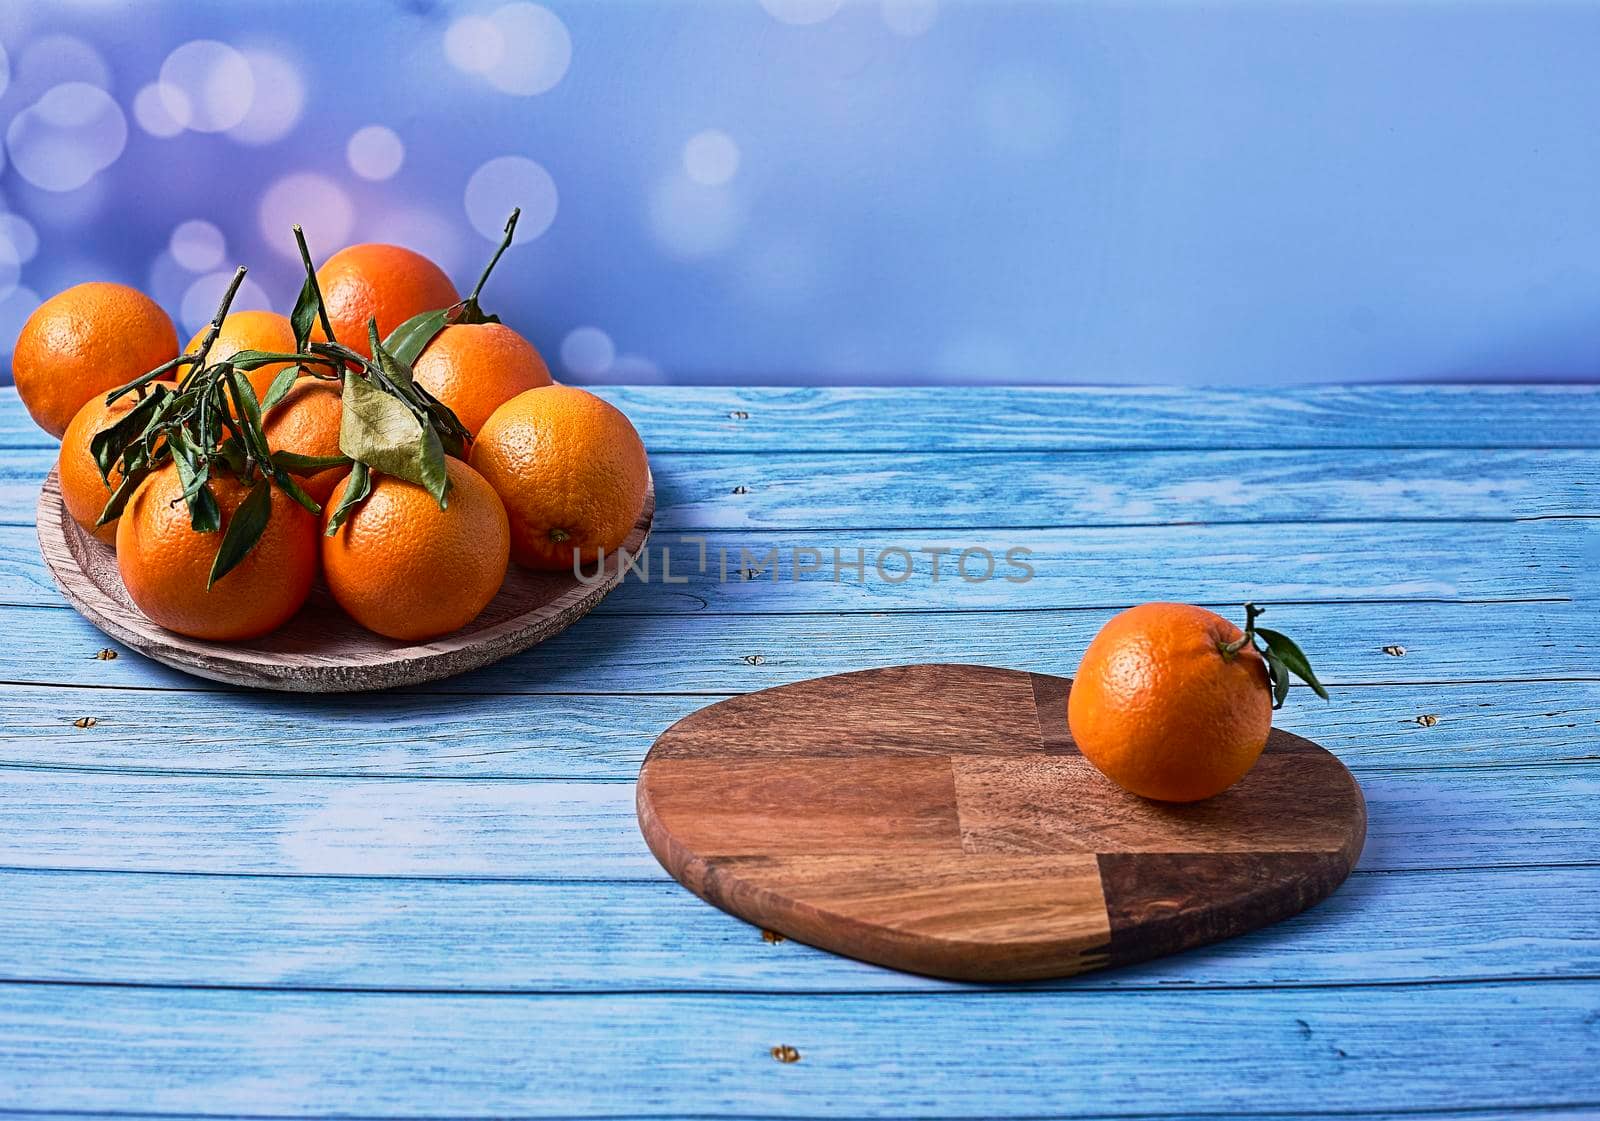 Group of oranges on wooden board by raul_ruiz